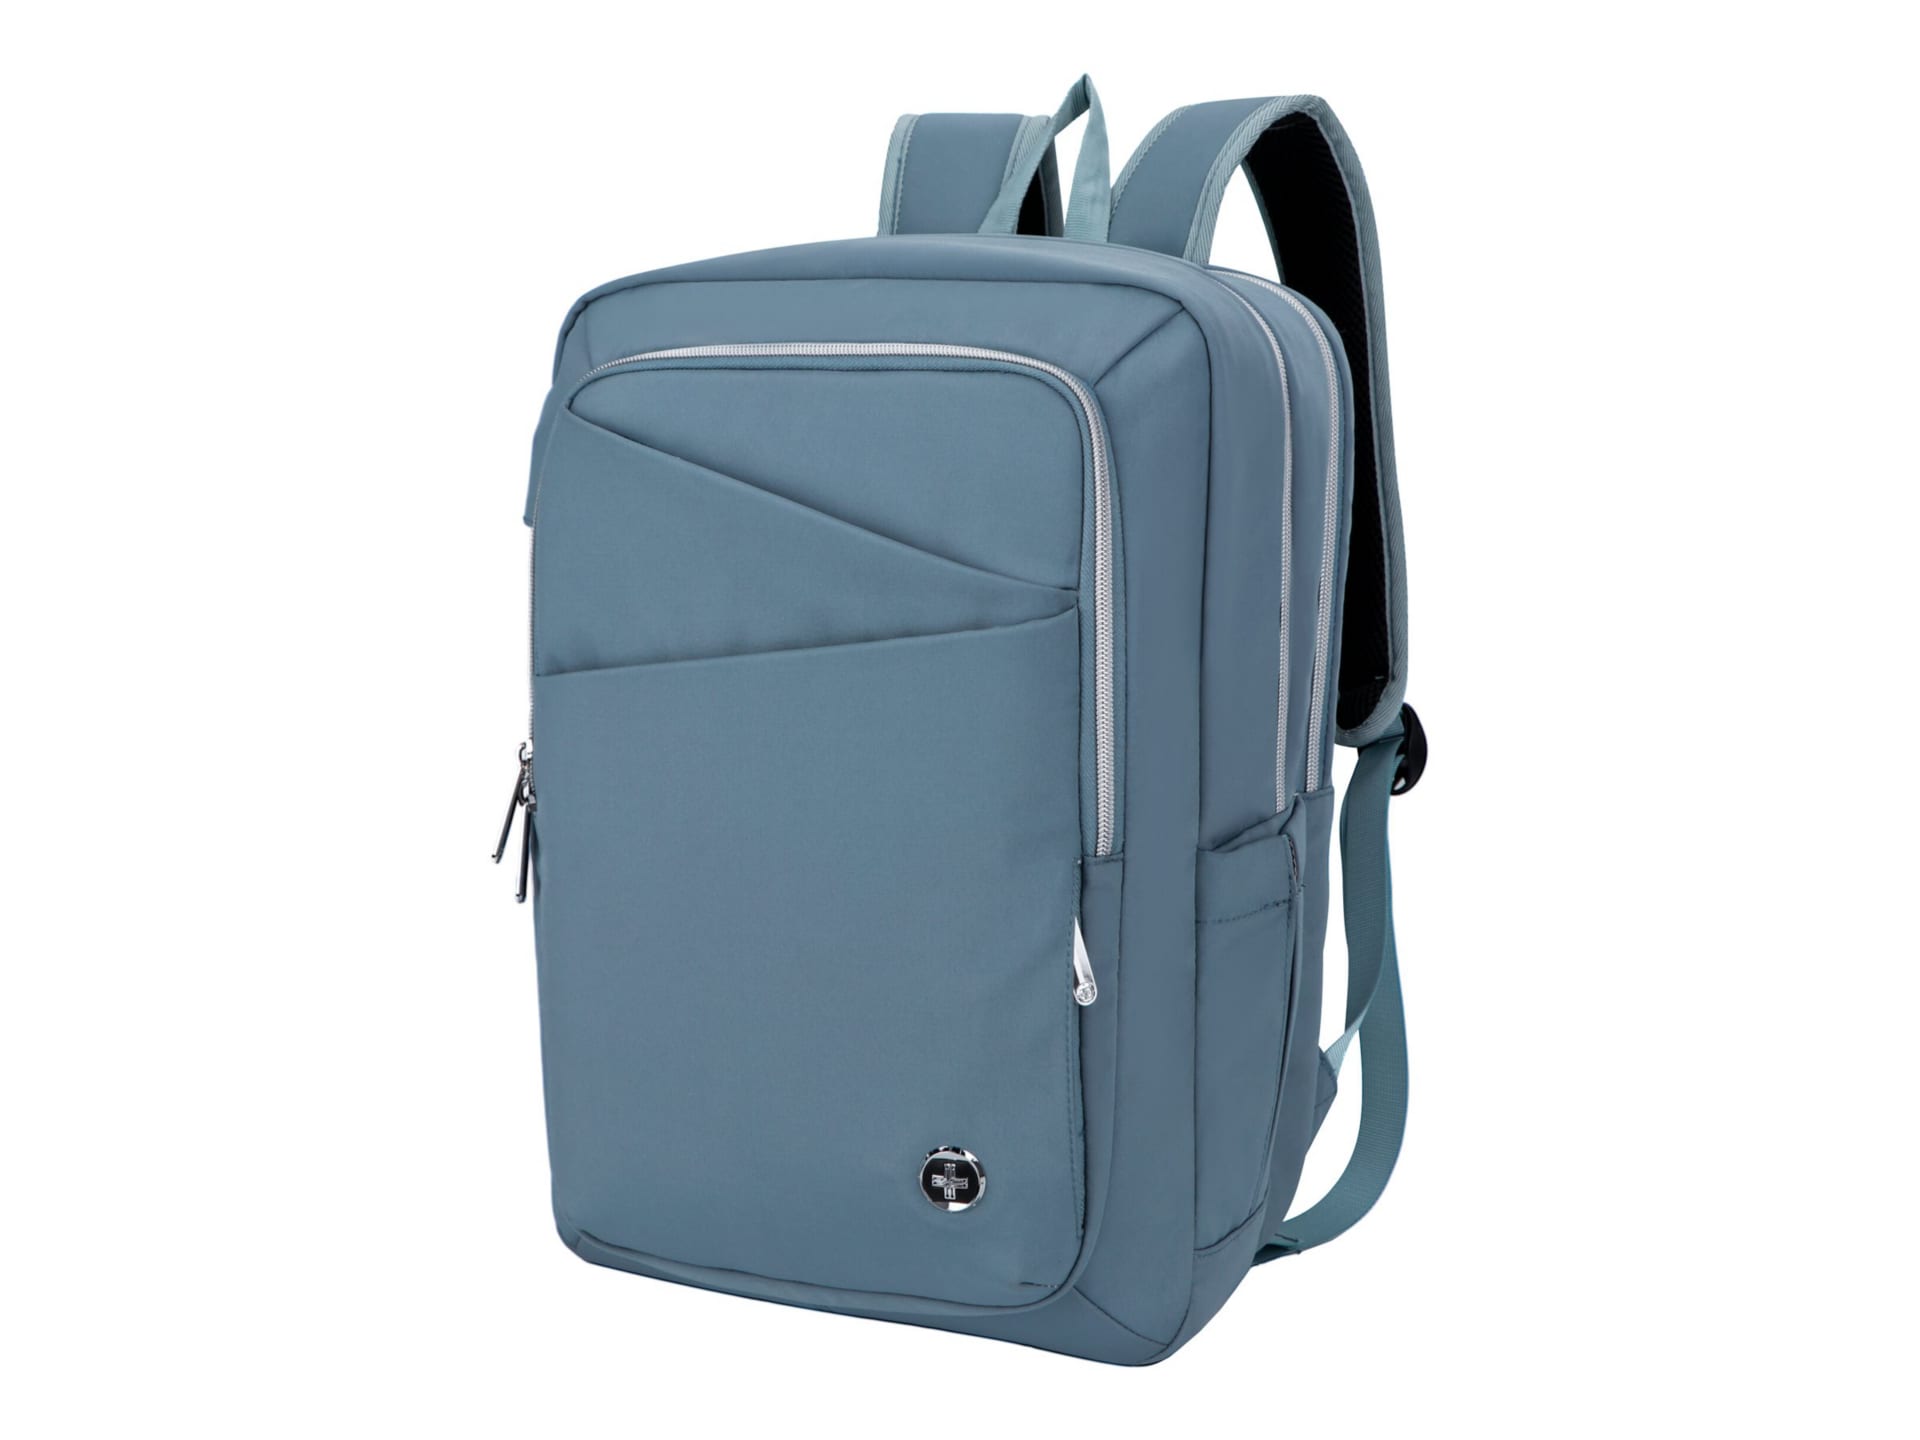 Swissdigital KATY ROSE F SD1006F-13 Carrying Case Backpack for 15.6" Laptop - Blue